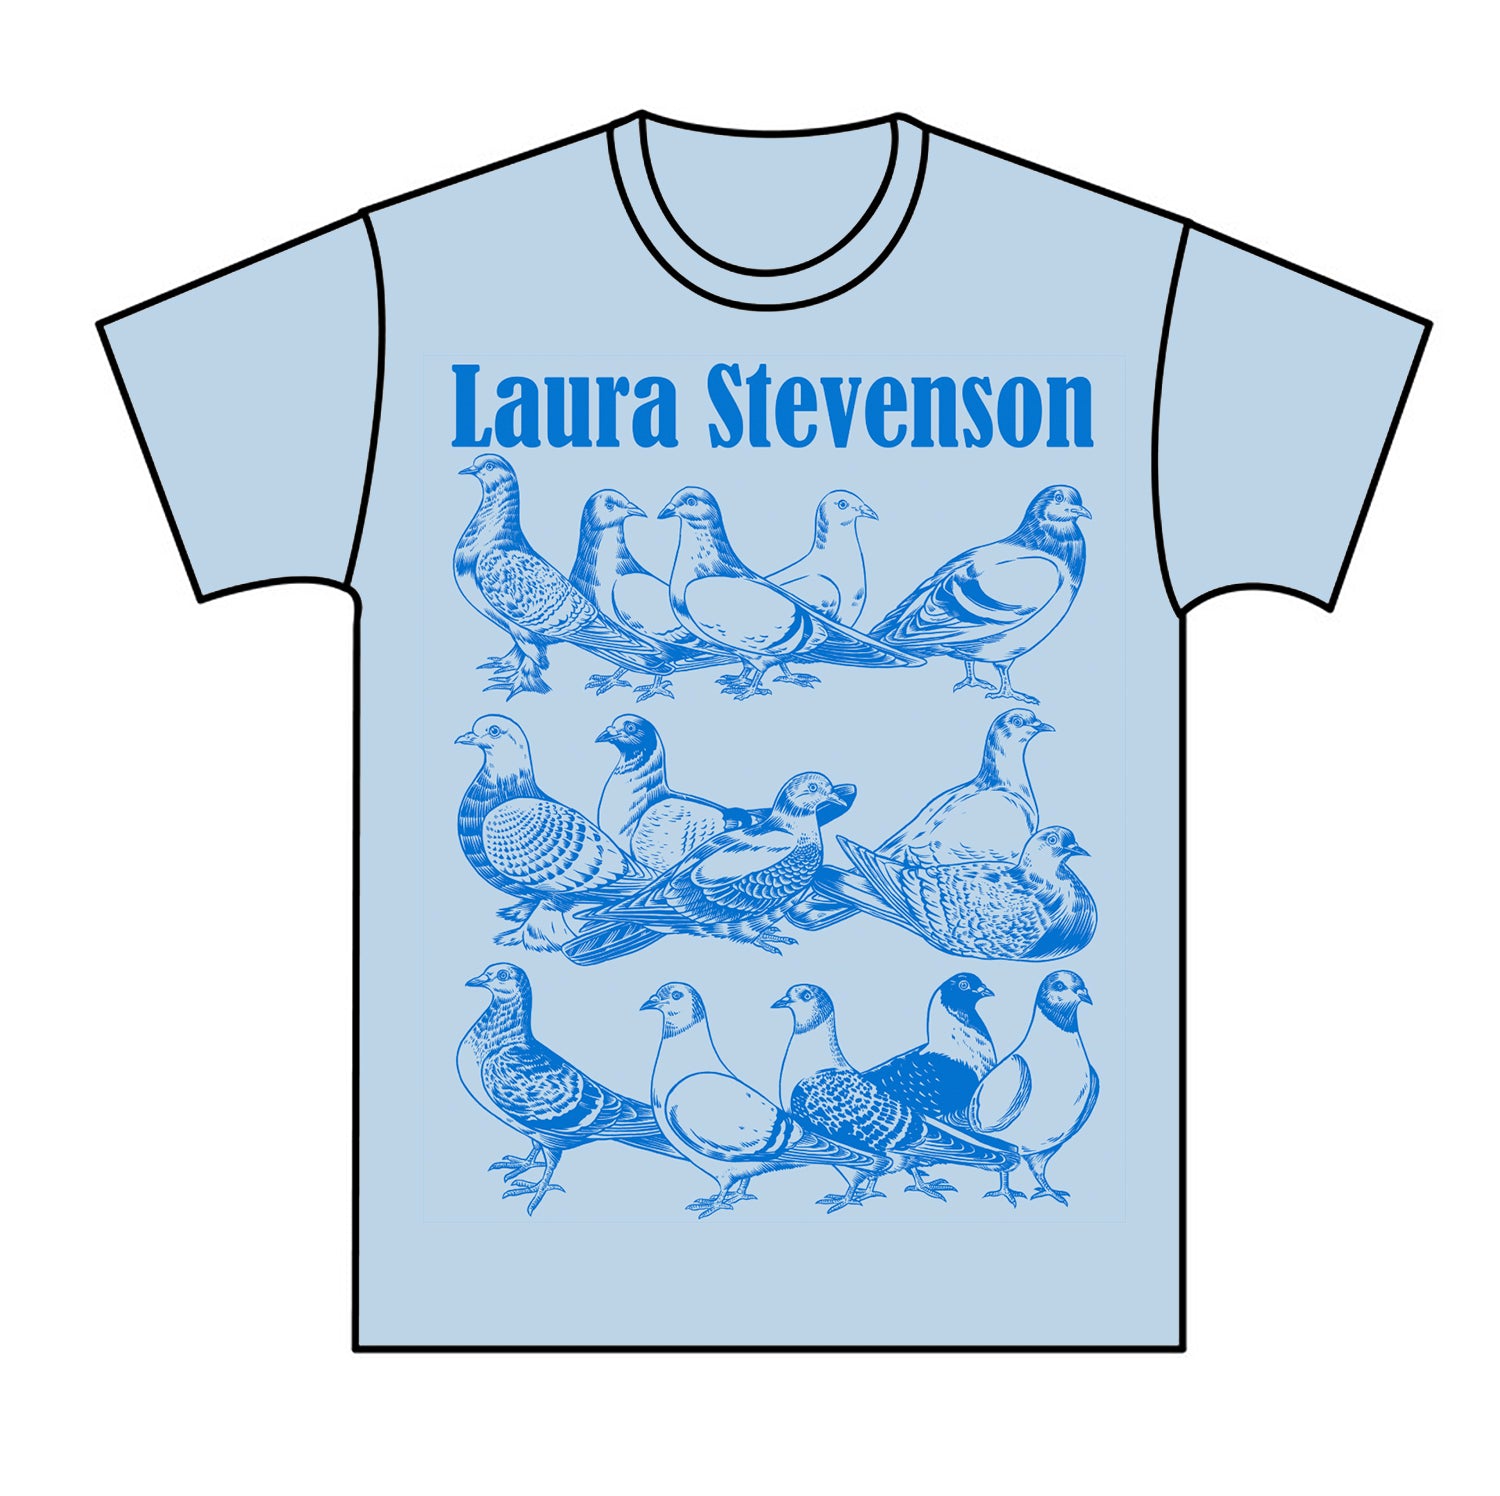 Laura Stevenson "Pigeons" T-Shirt